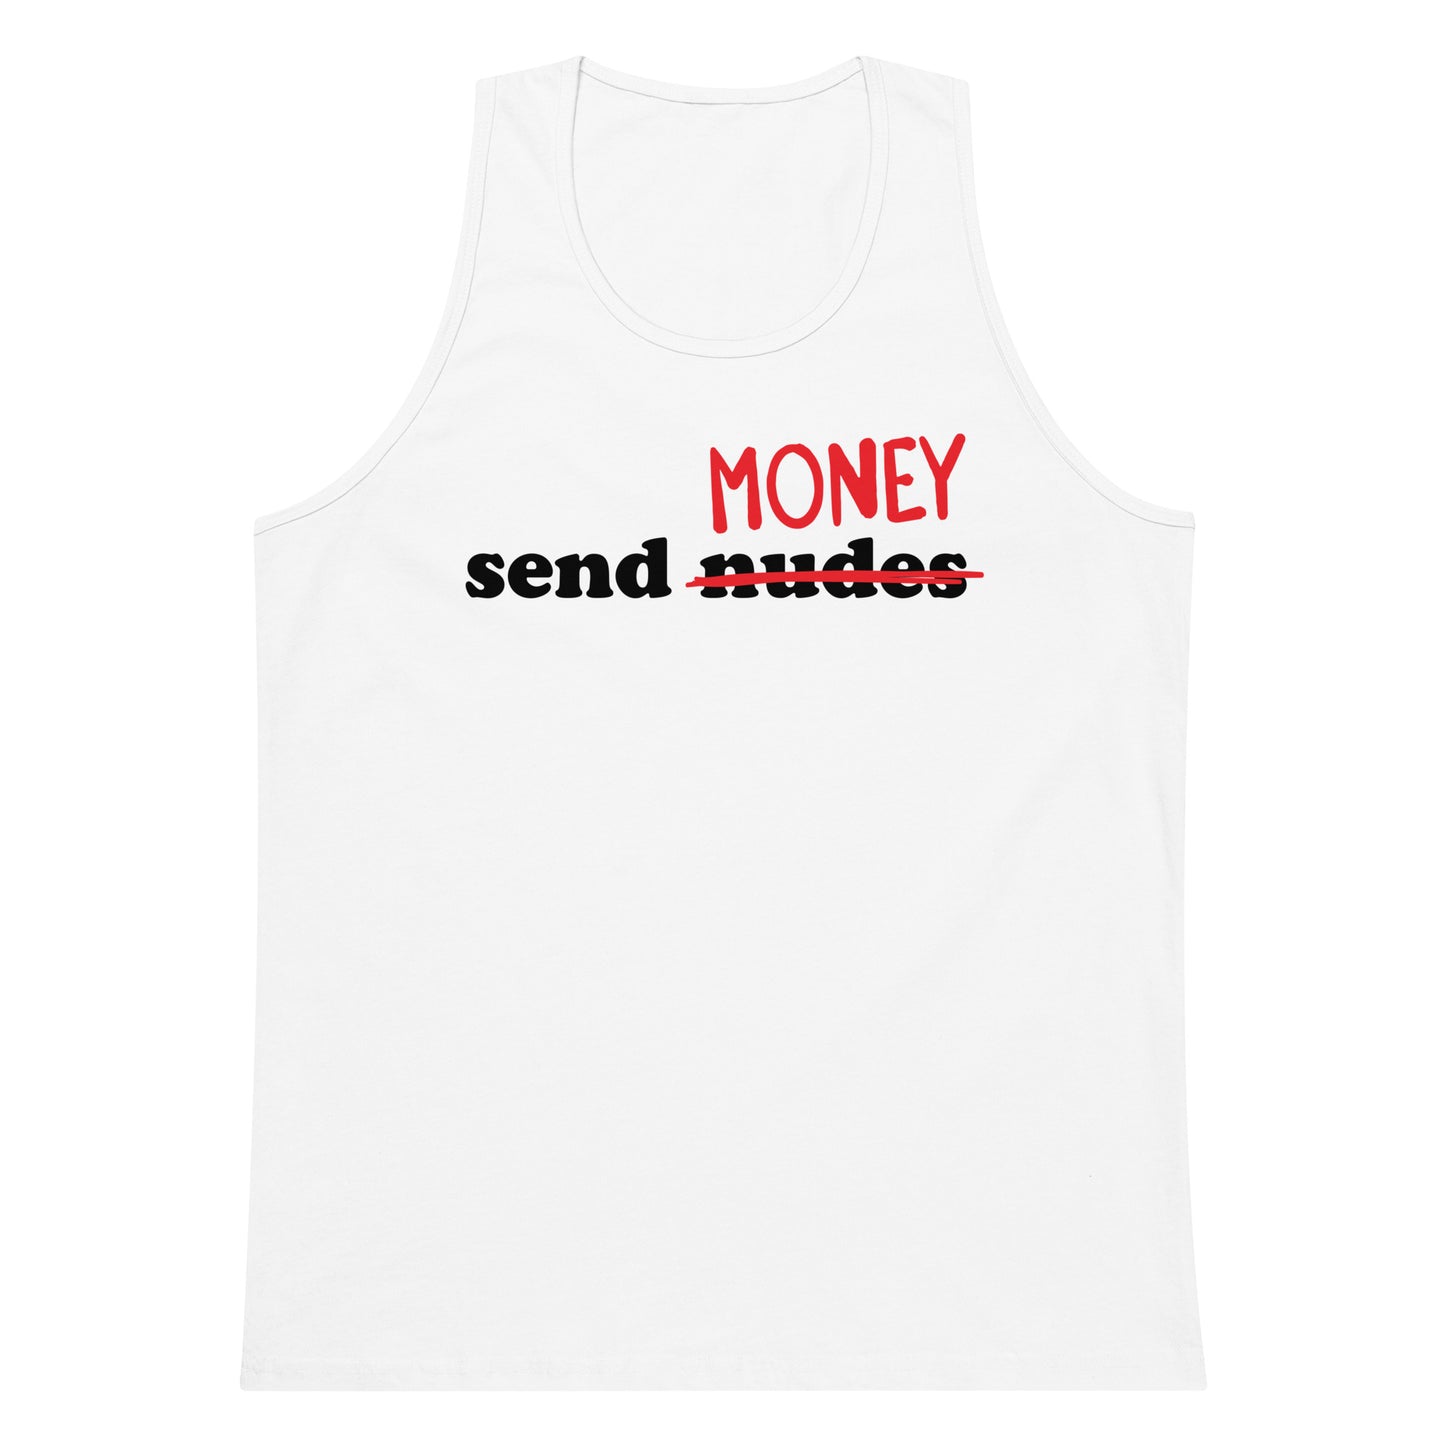 Send Money tank top